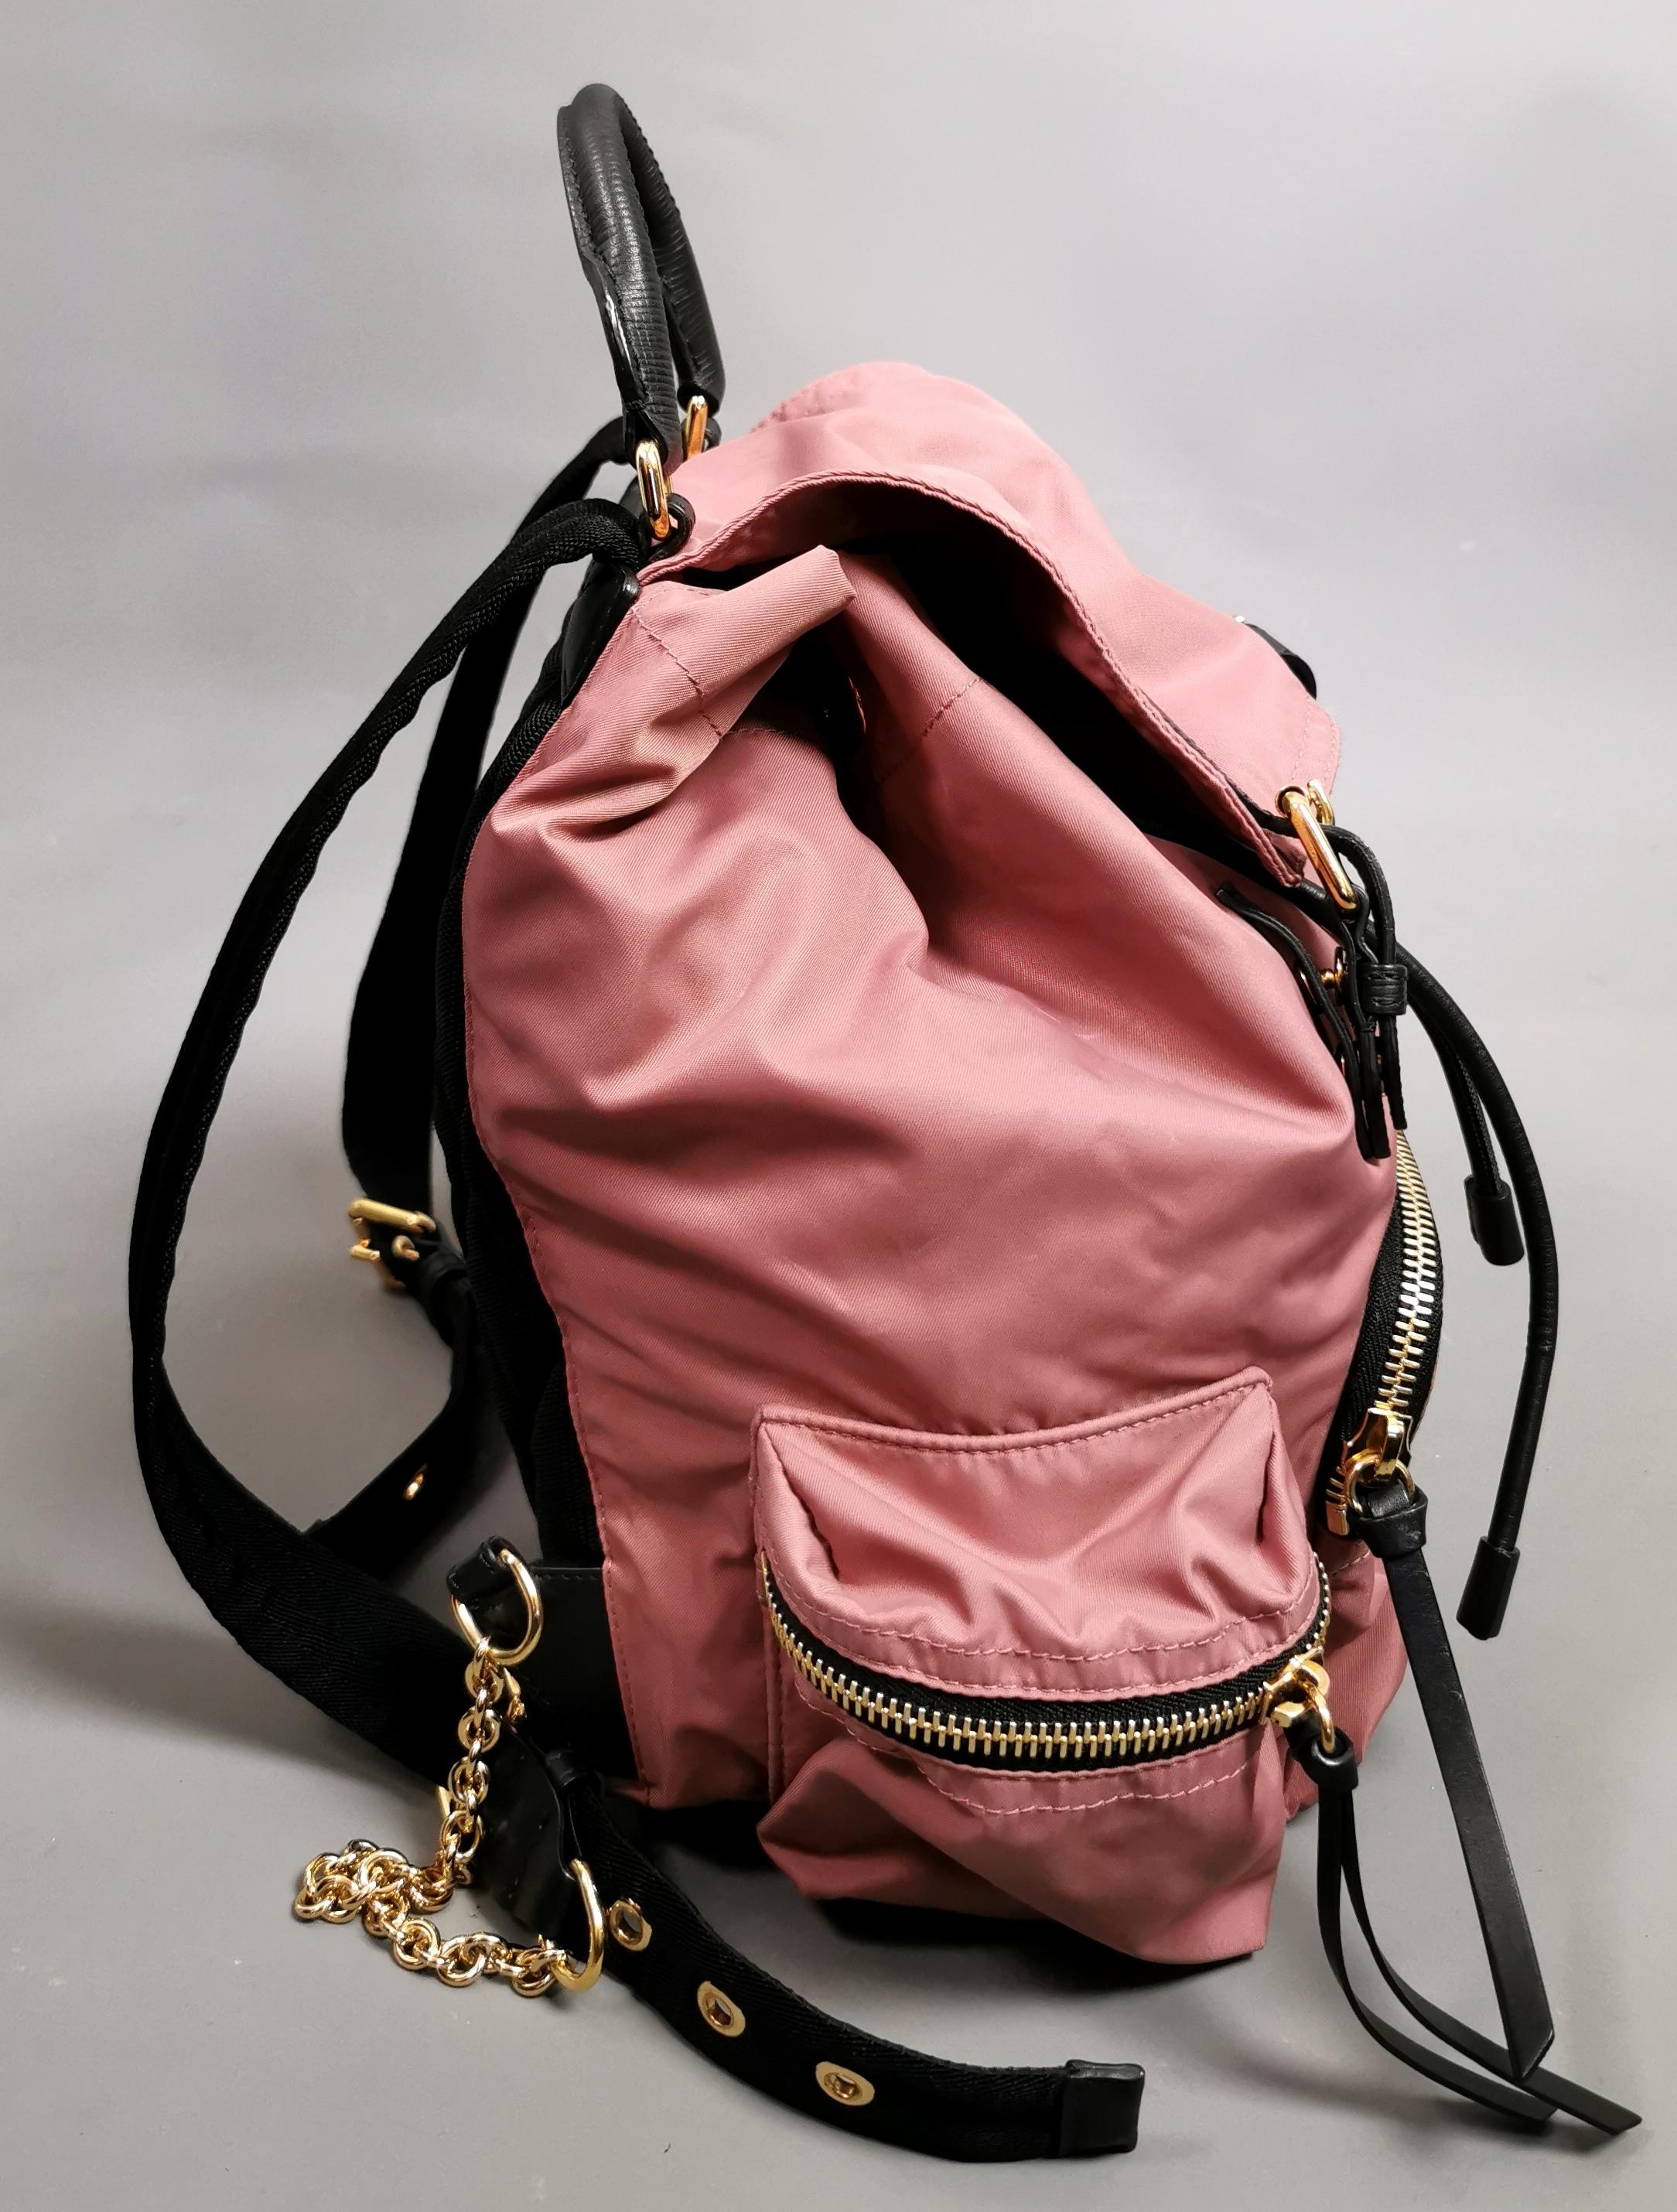 Women's Burberry The Rucksack, pink nylon backpack, gold tone hardware 